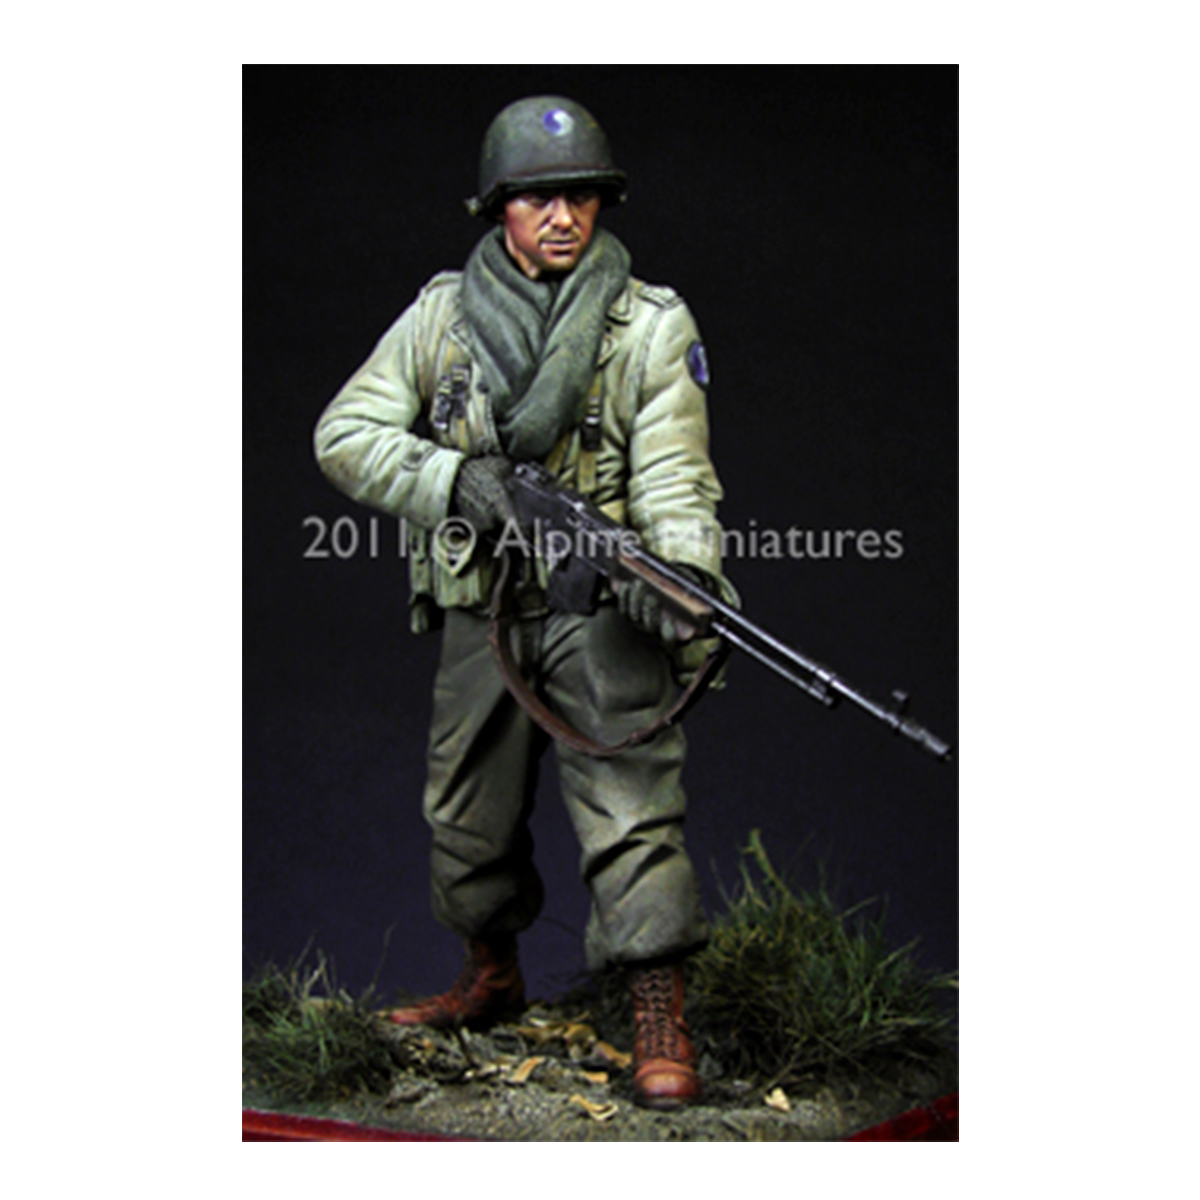 Alpine Miniatures – BAR Gunner US 29th Infantry Division (1/16)